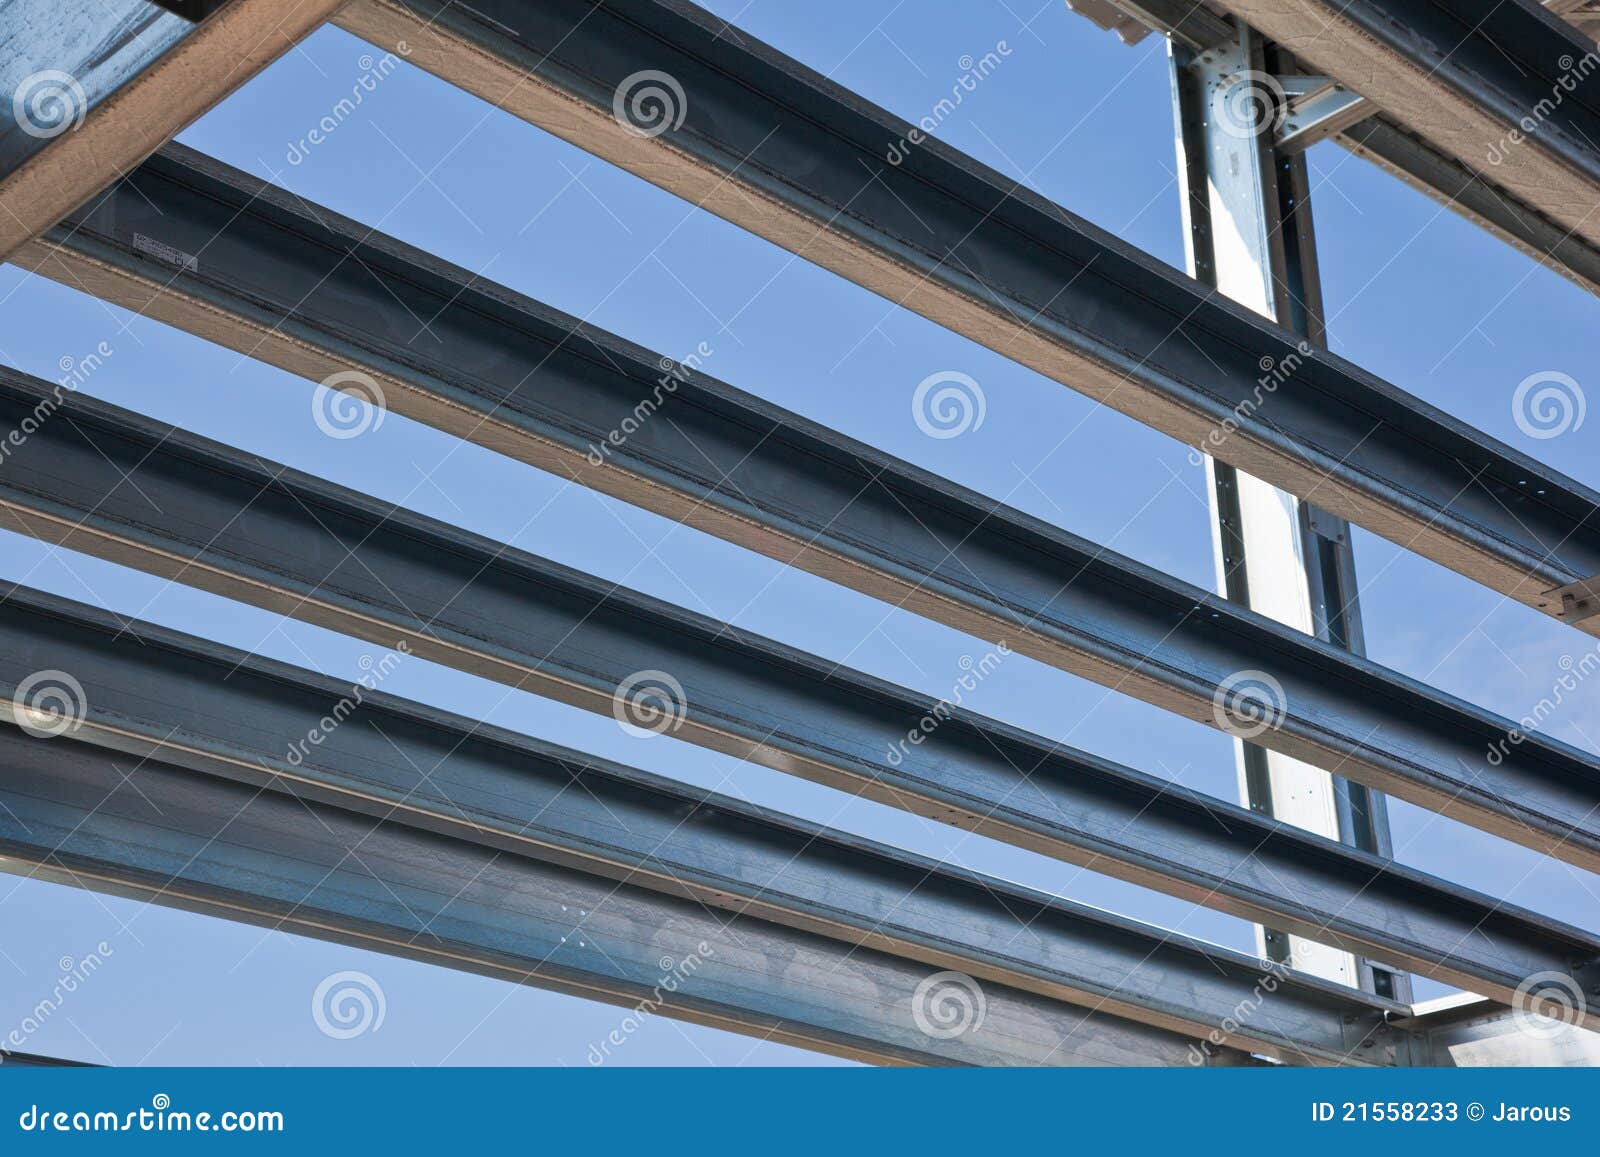 Girders stock image. Image of railing, buildings, girders - 21558233